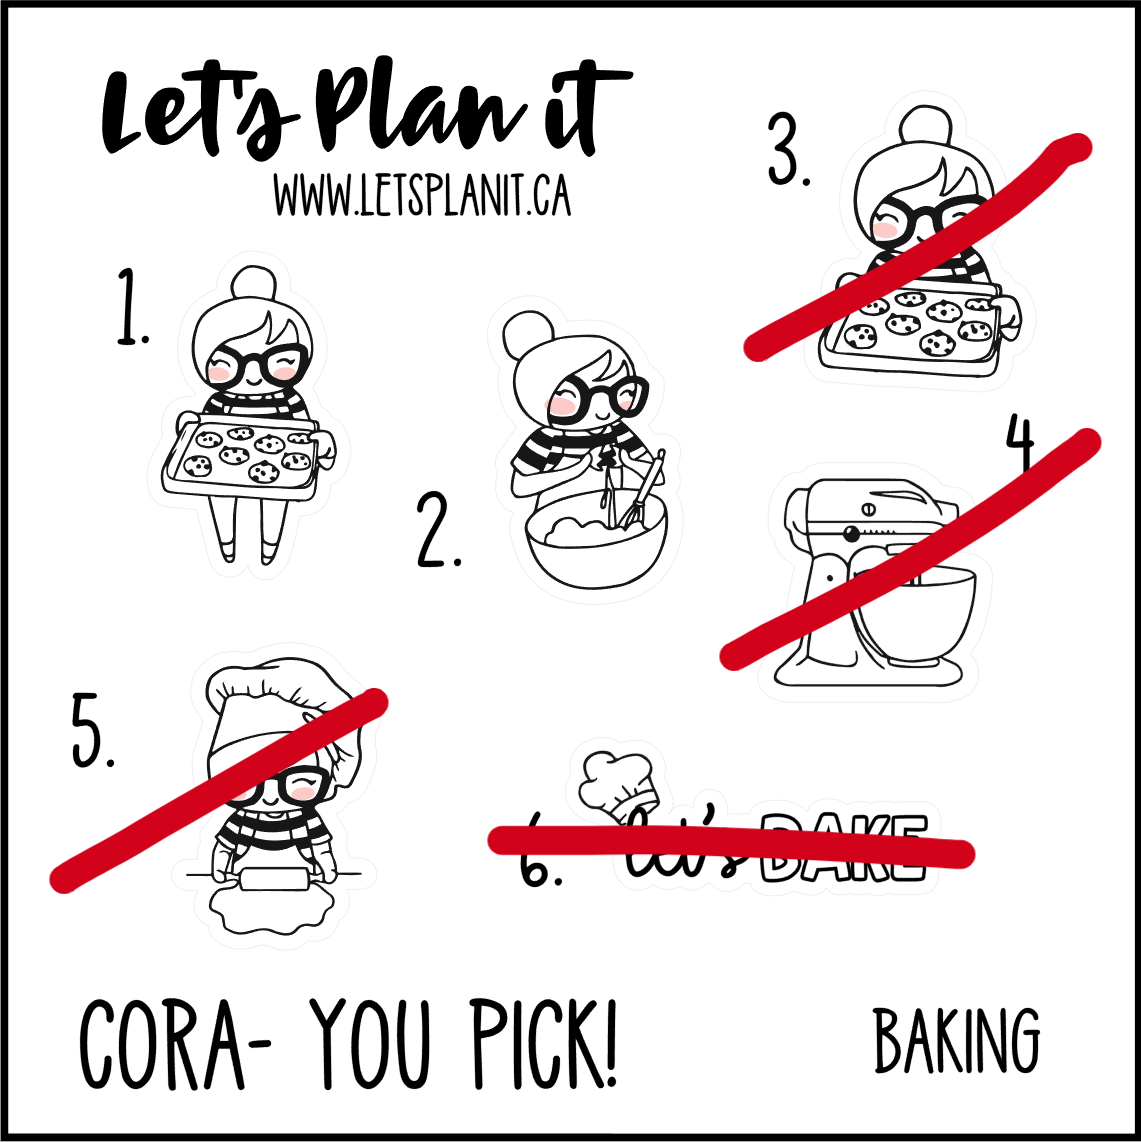 Cora-u-pick- Baking